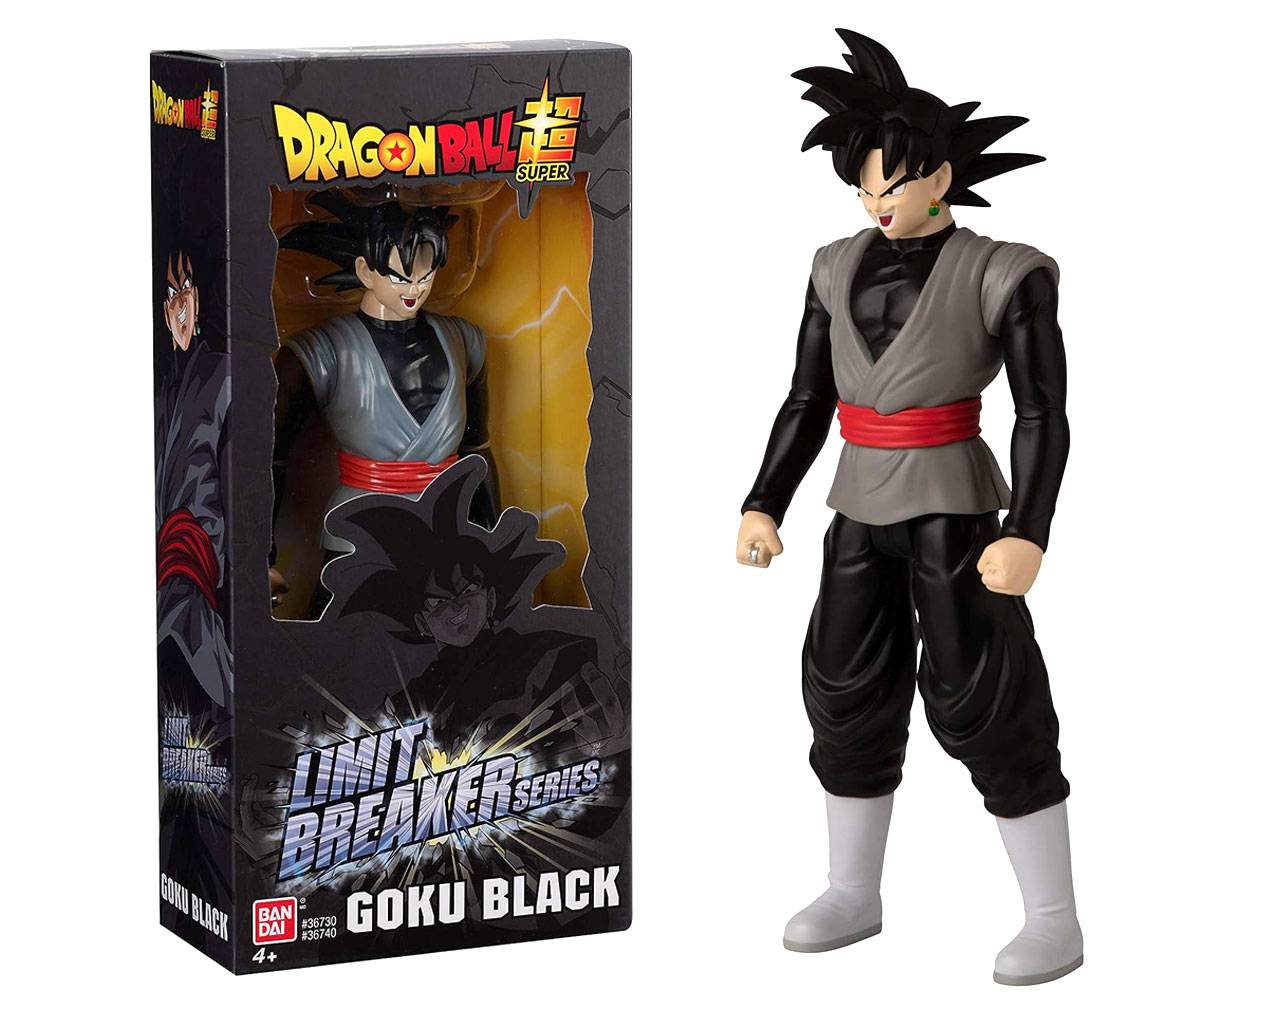 Goku Black - Dragon Ball Super Limit Breaker Series Bandai